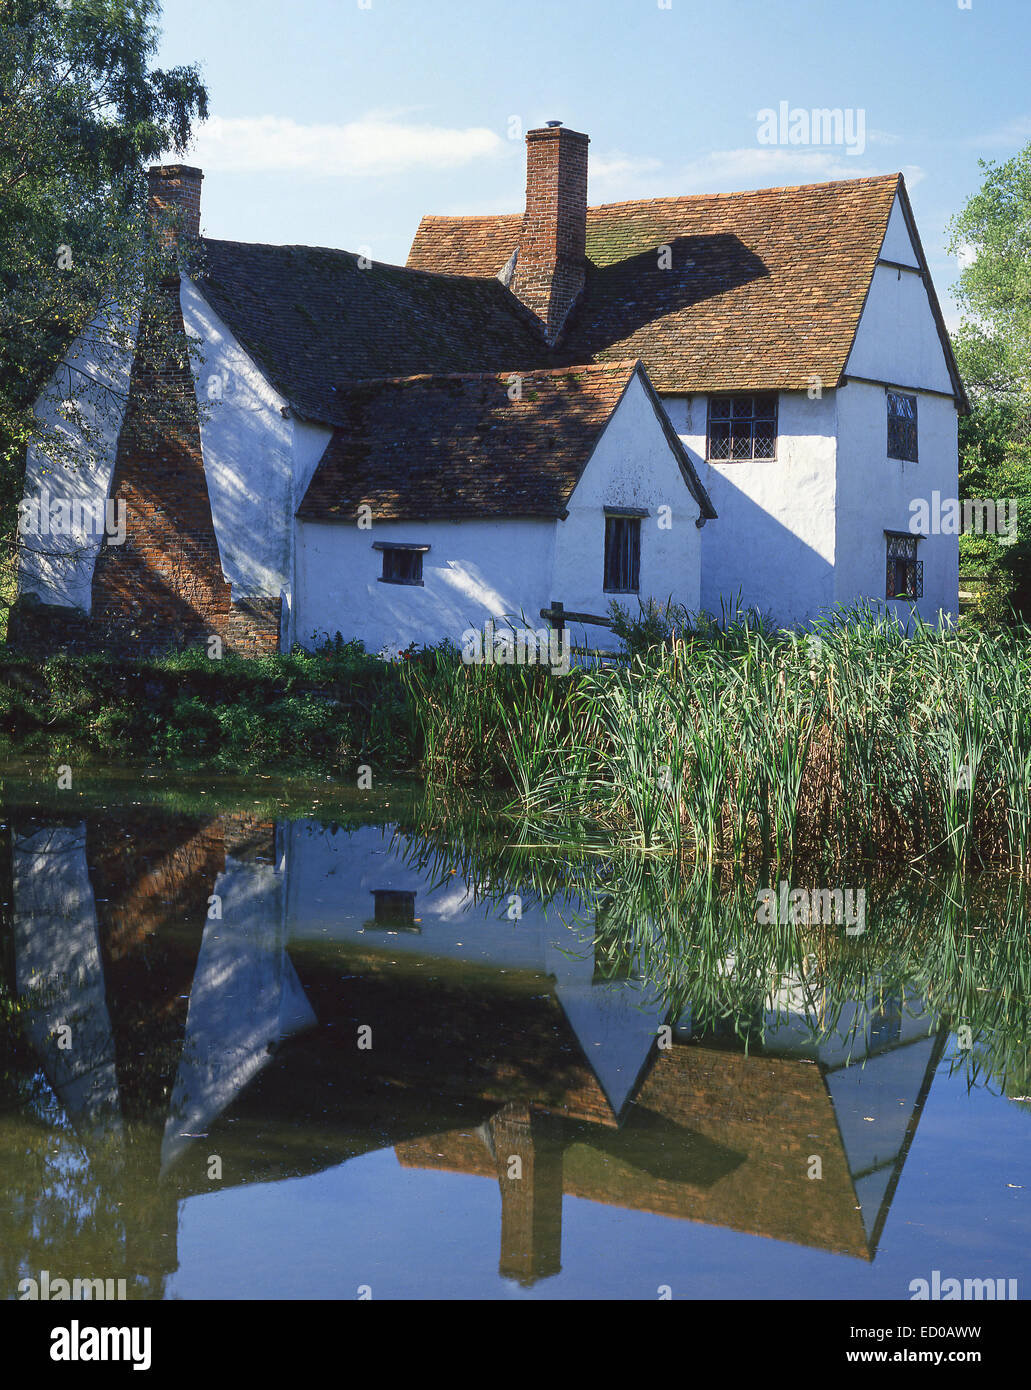 Lott Wlly's Cottage, Moulin de Flatford, East Bergholt, dans le Suffolk, Angleterre, Royaume-Uni Banque D'Images